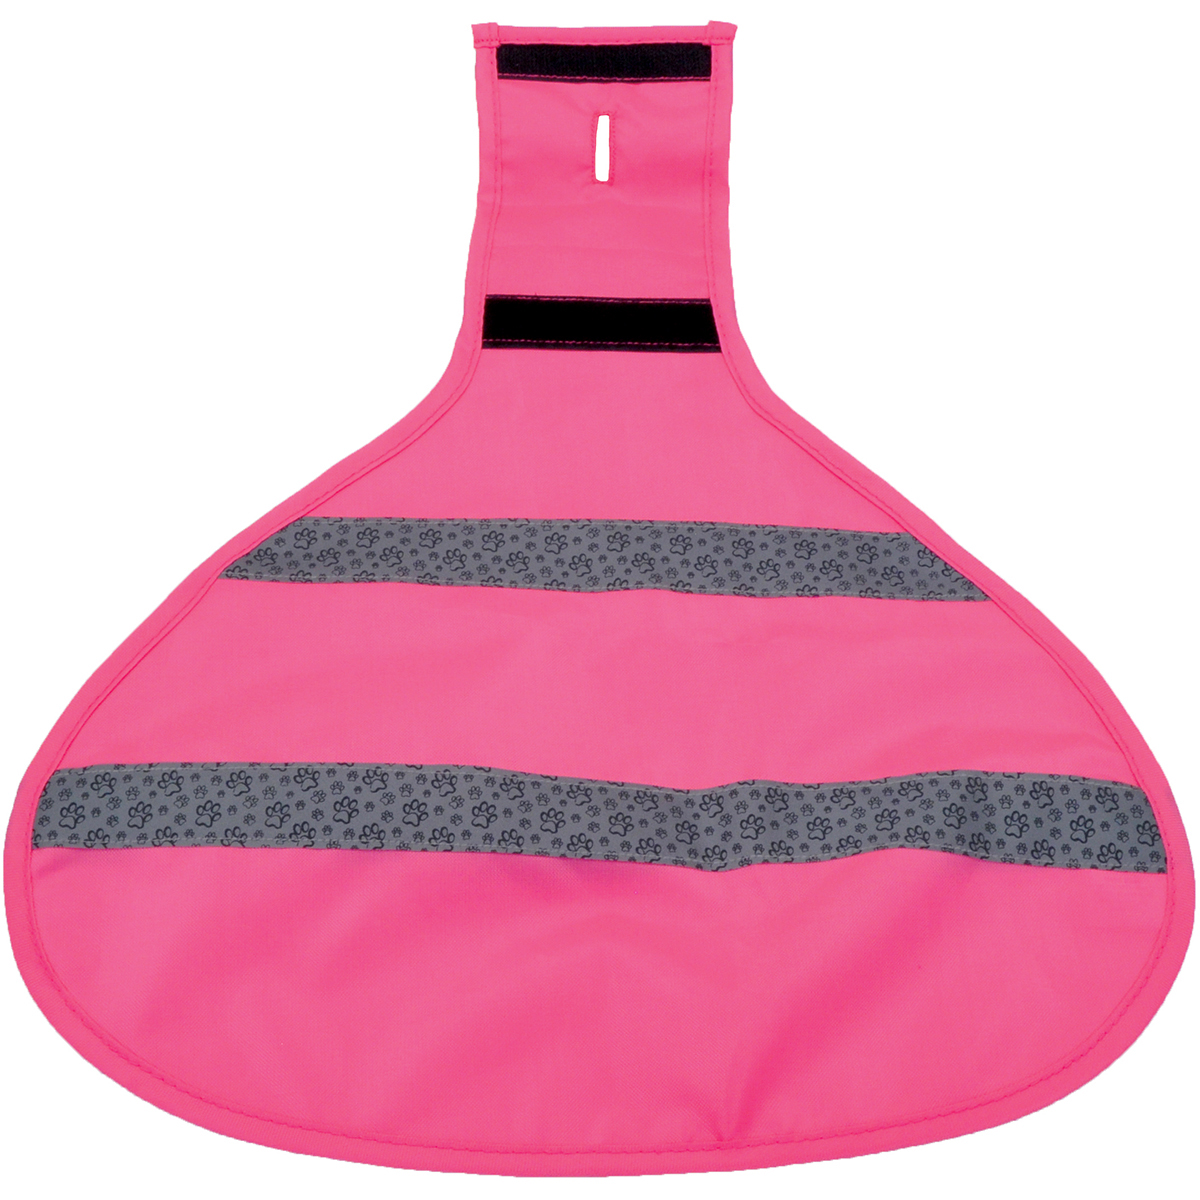 Reflective Safety Vest, Neon Pink - Large